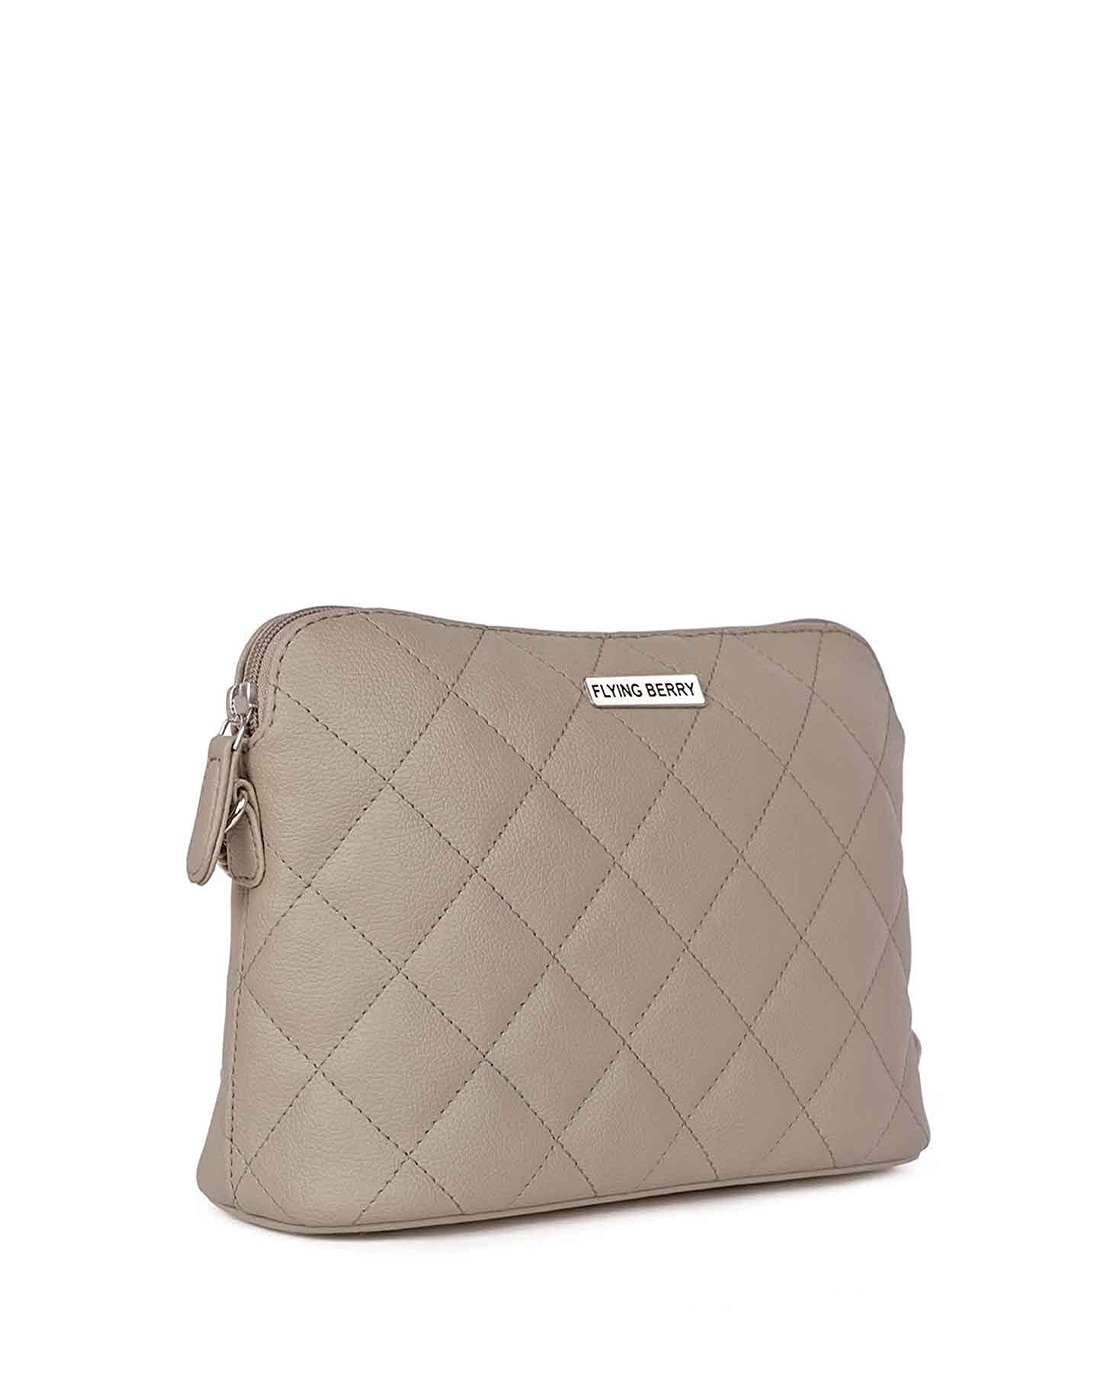 Buy FLYING BERRY Women's Handbag with Clutch (Set of 2, FB-2065 COMBO  P_Black) at Amazon.in